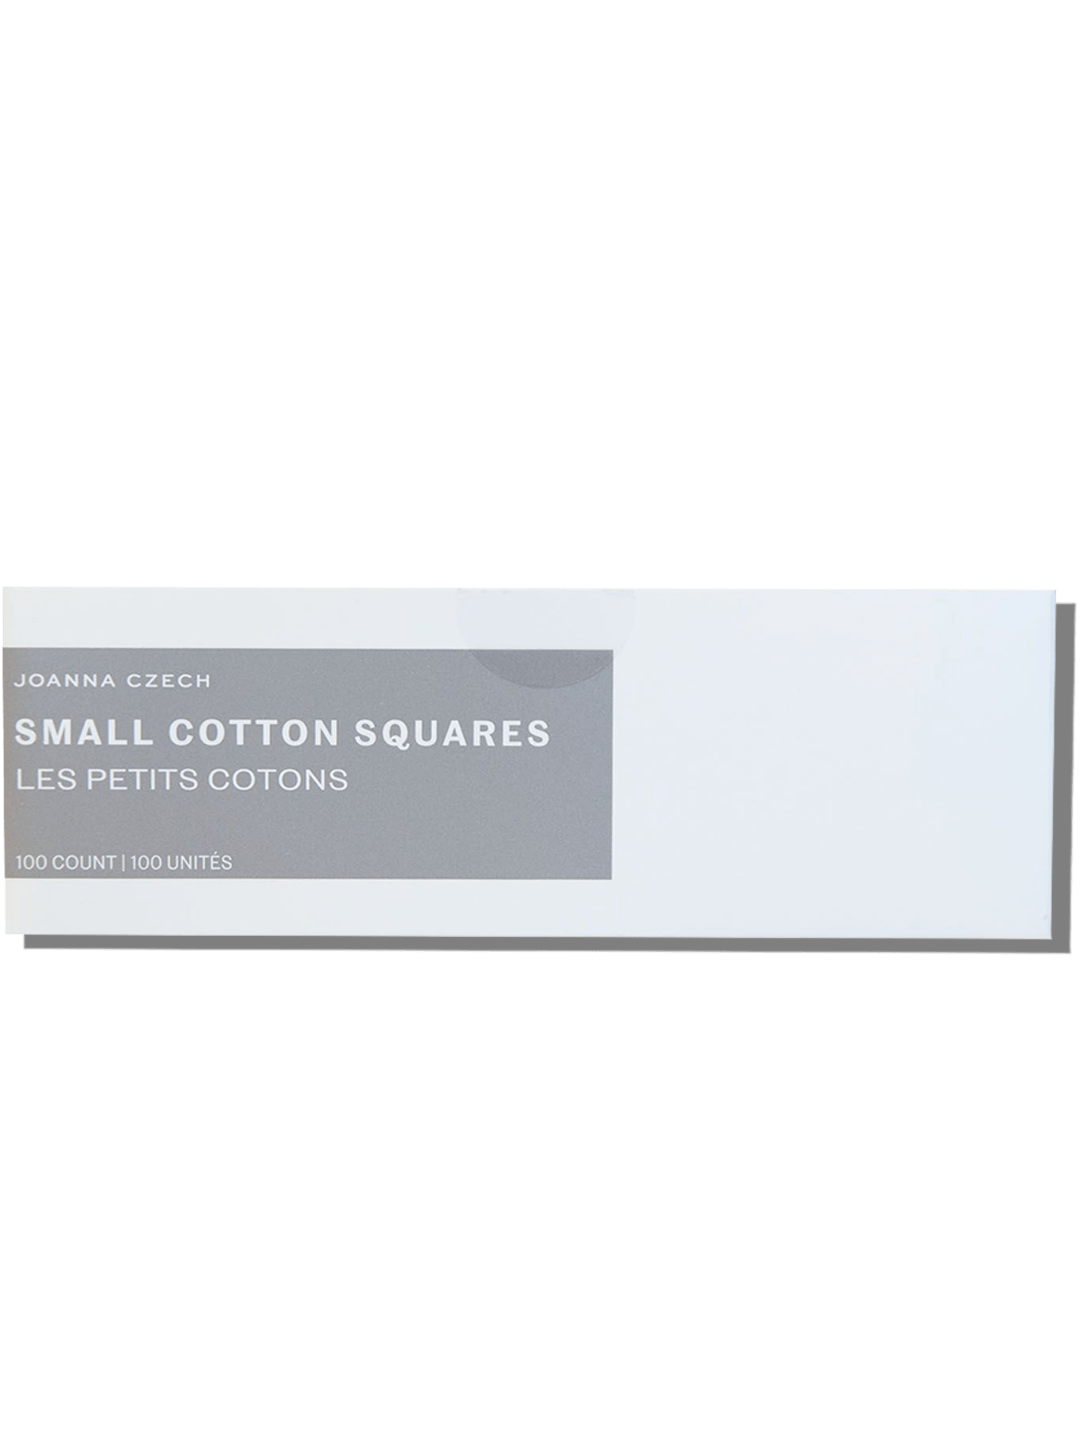 The Cotton Squares